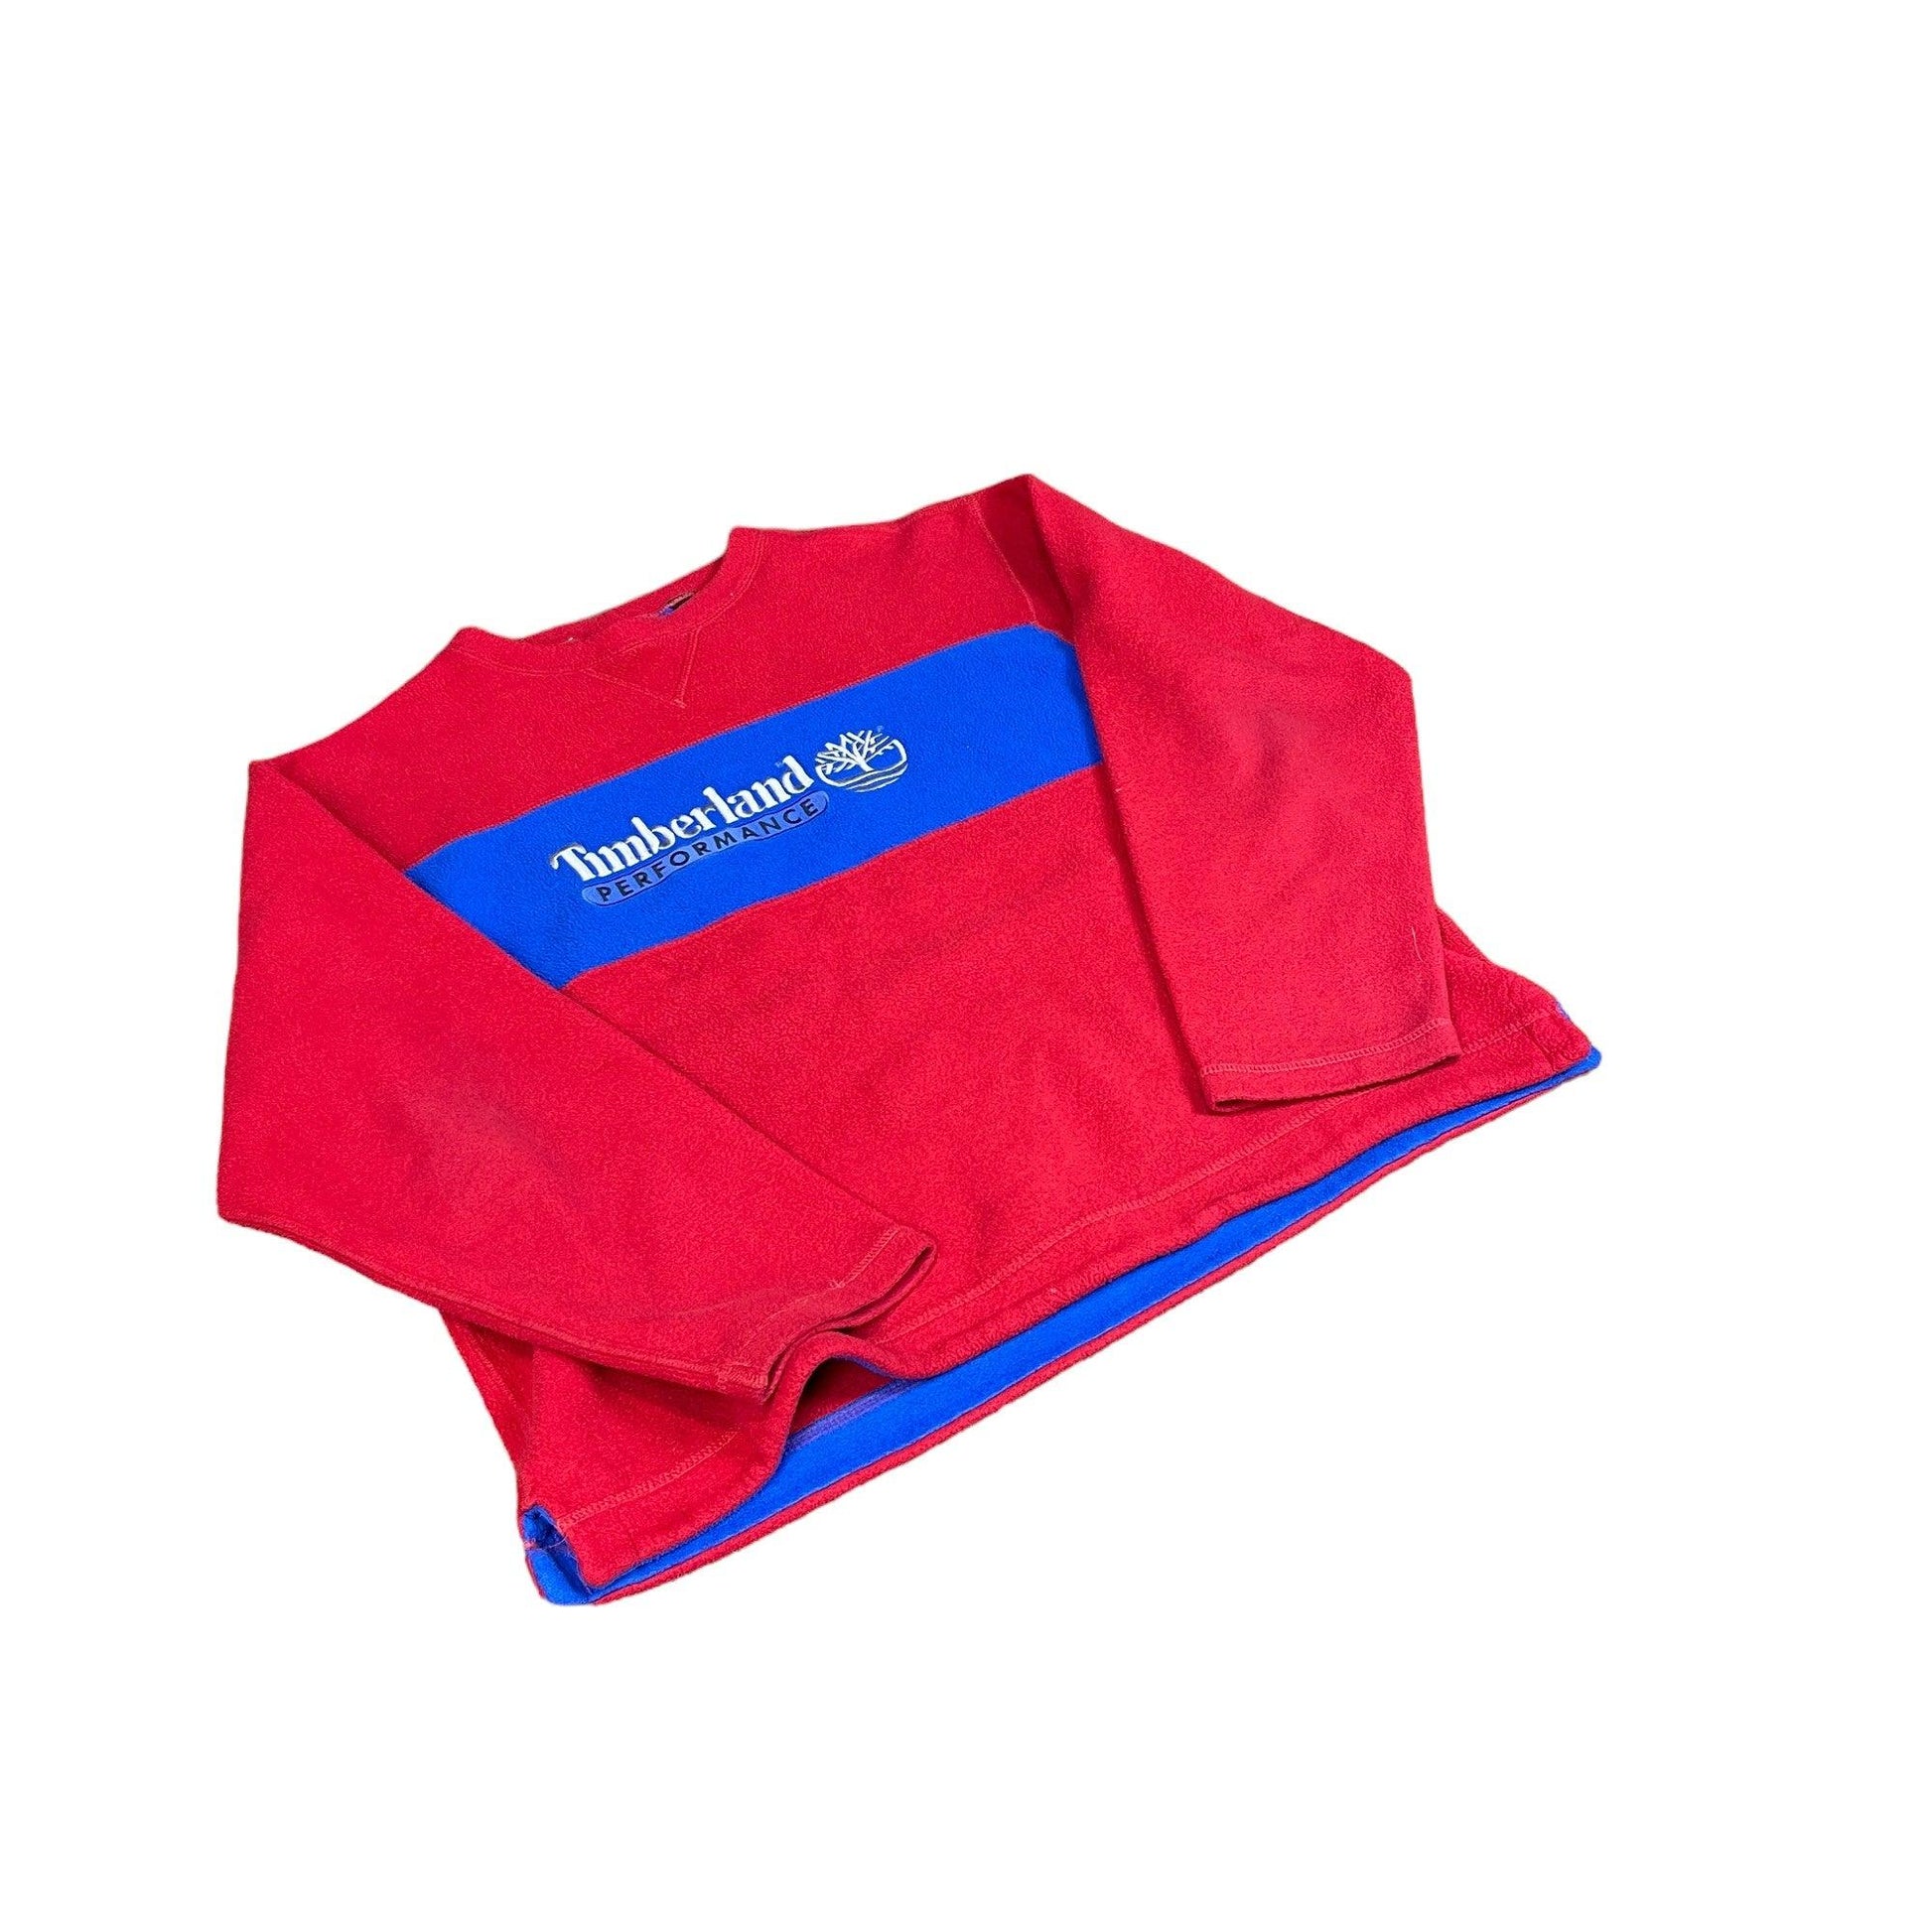 Vintage 90s Red + Blue Timberland Performance Fleece Sweatshirt - Large - The Streetwear Studio